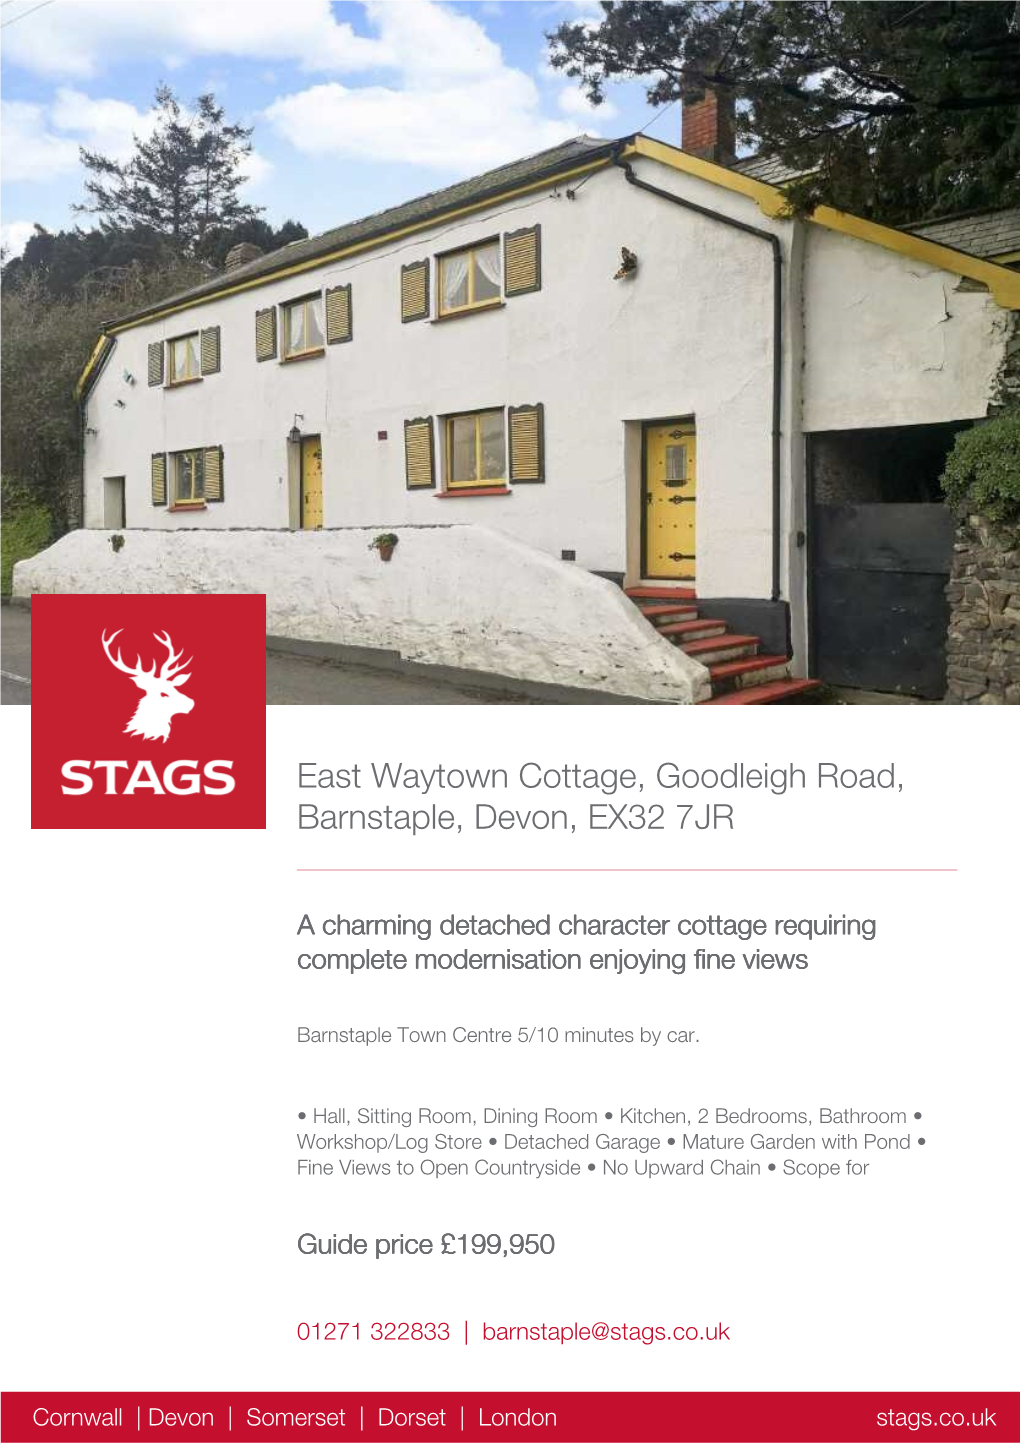 East Waytown Cottage, Goodleigh Road, Barnstaple, Devon, EX32 7JR